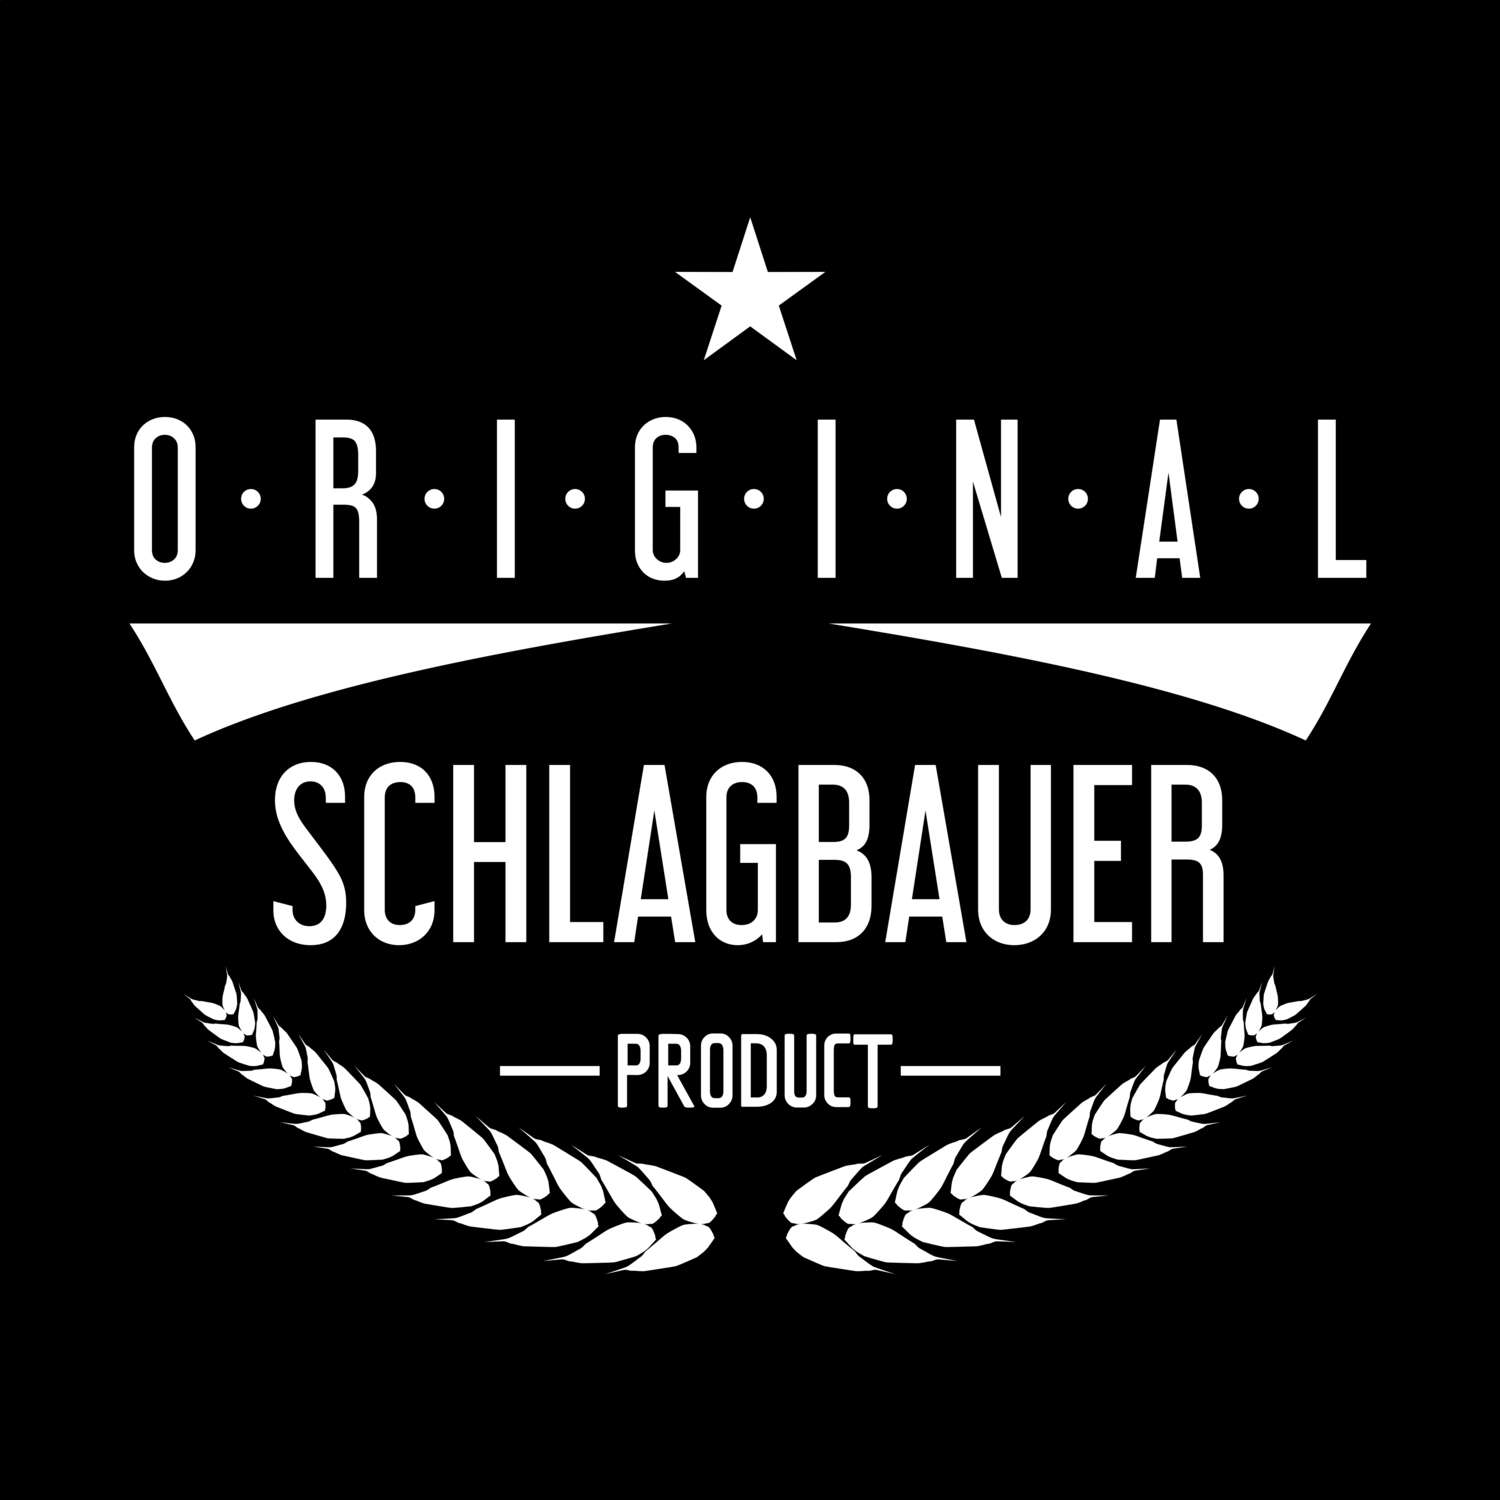 Schlagbauer T-Shirt »Original Product«